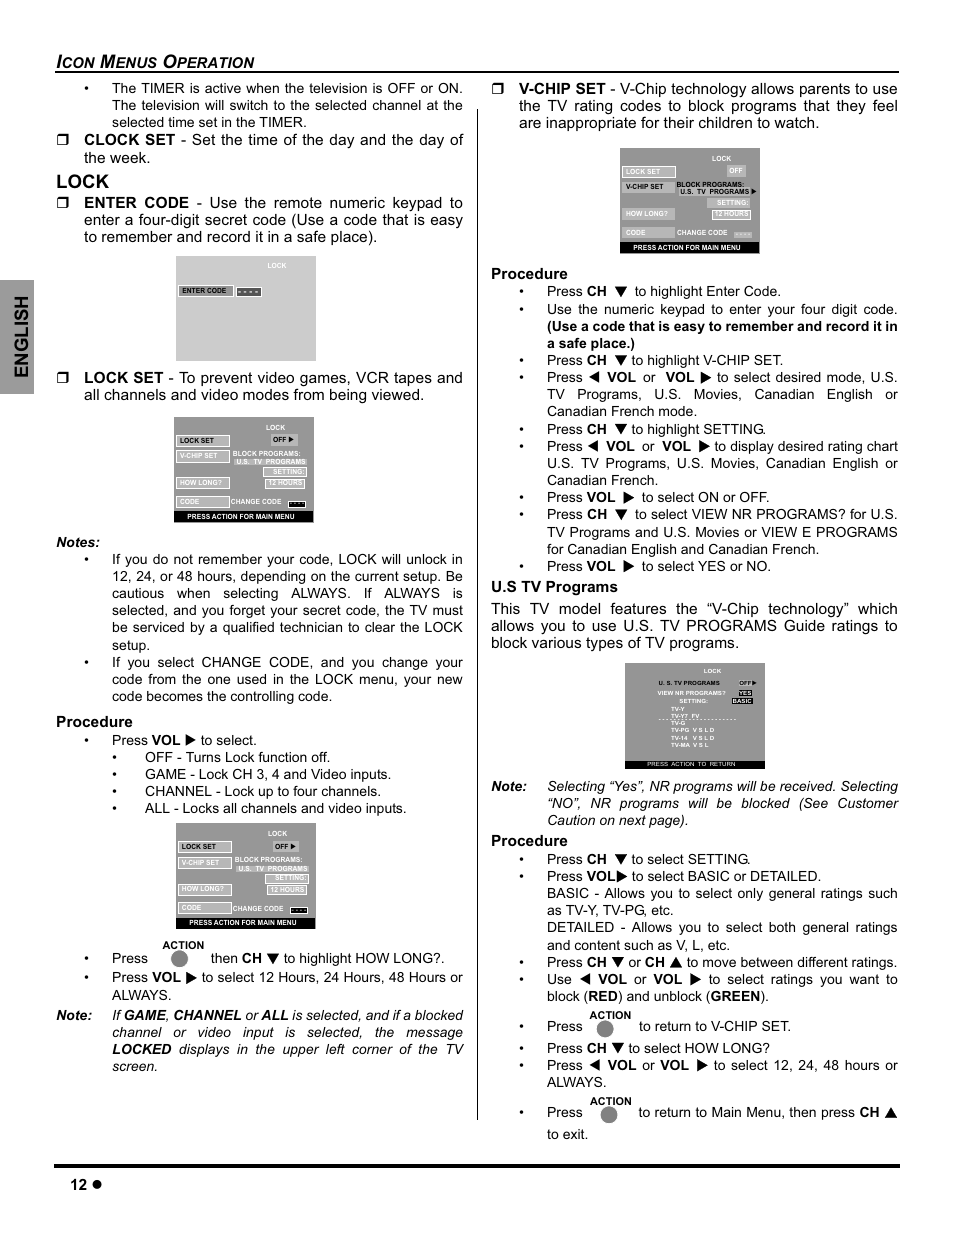 Lock, English | Panasonic CT-32HC15 Manuel d'utilisation | Page 14 / 56